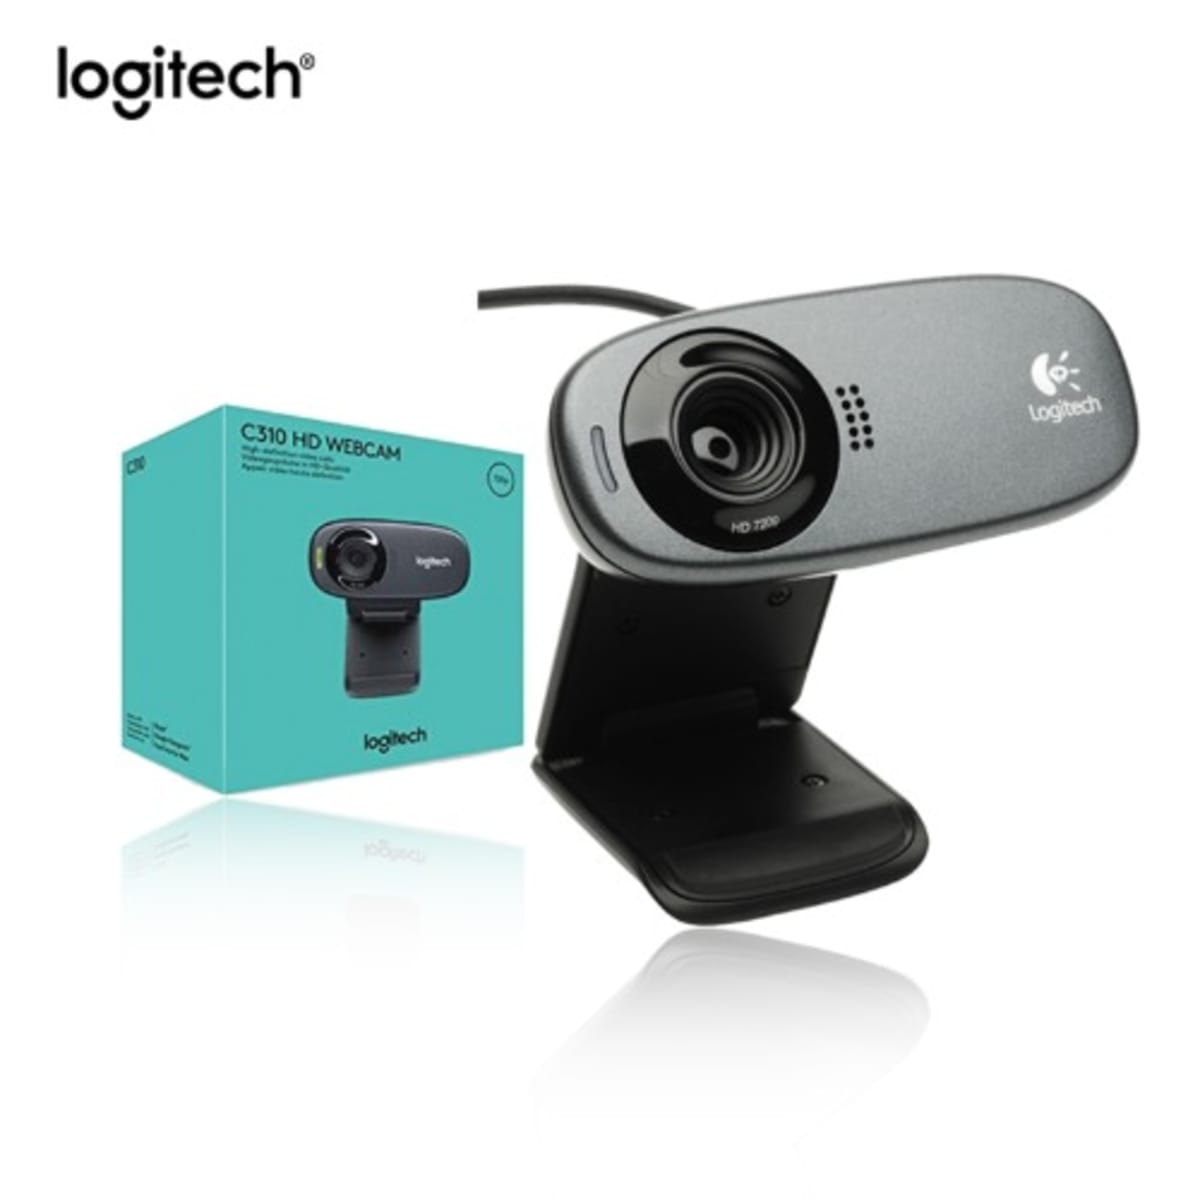 Logitech Webcam Video - Hd C310 | Konga Online Shopping